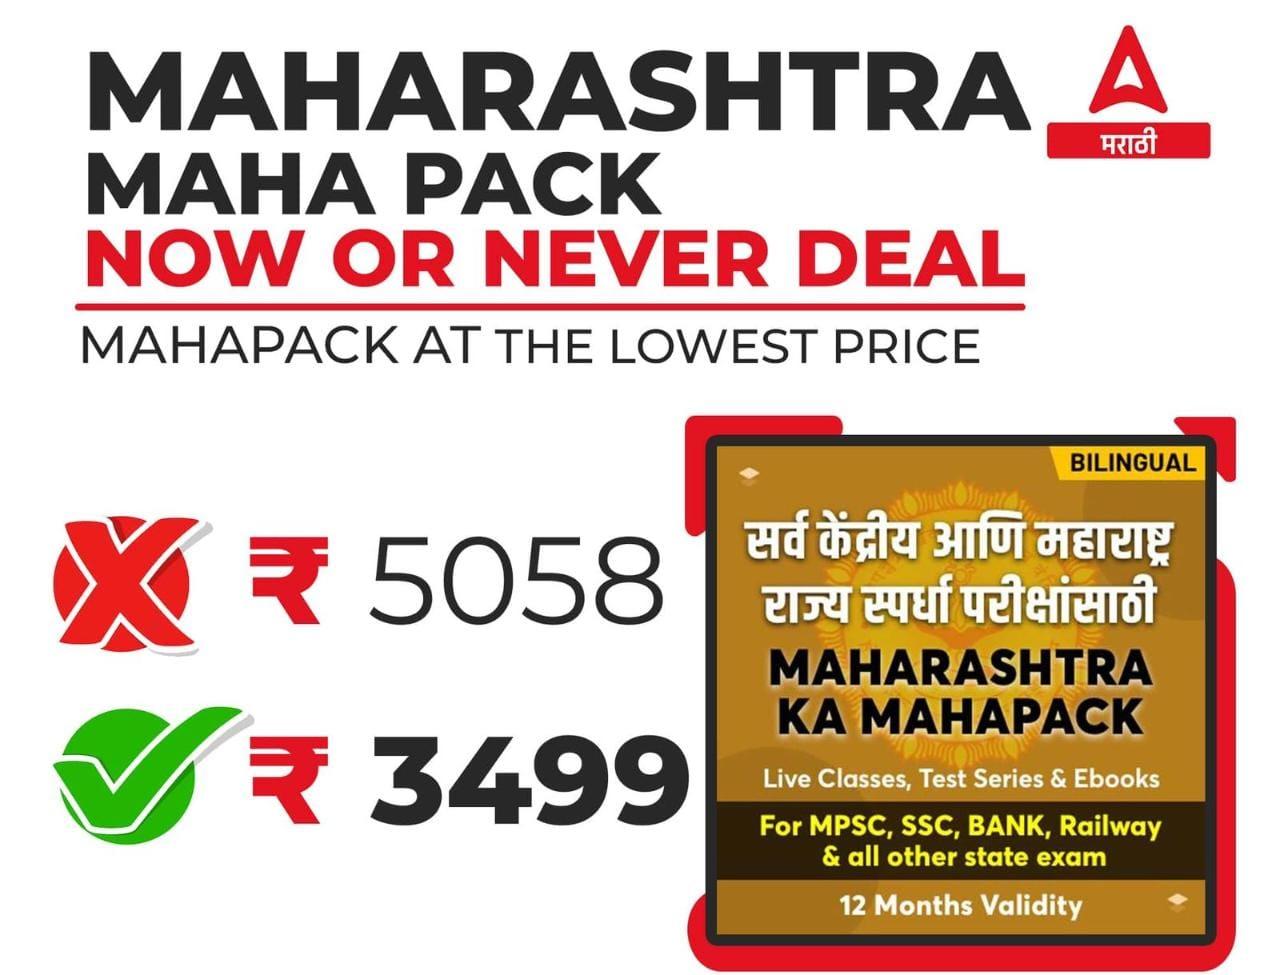 Maharashtra Maha Pack Now or Never Deal | महाराष्ट्र महापॅकवर उत्तम offer_30.1